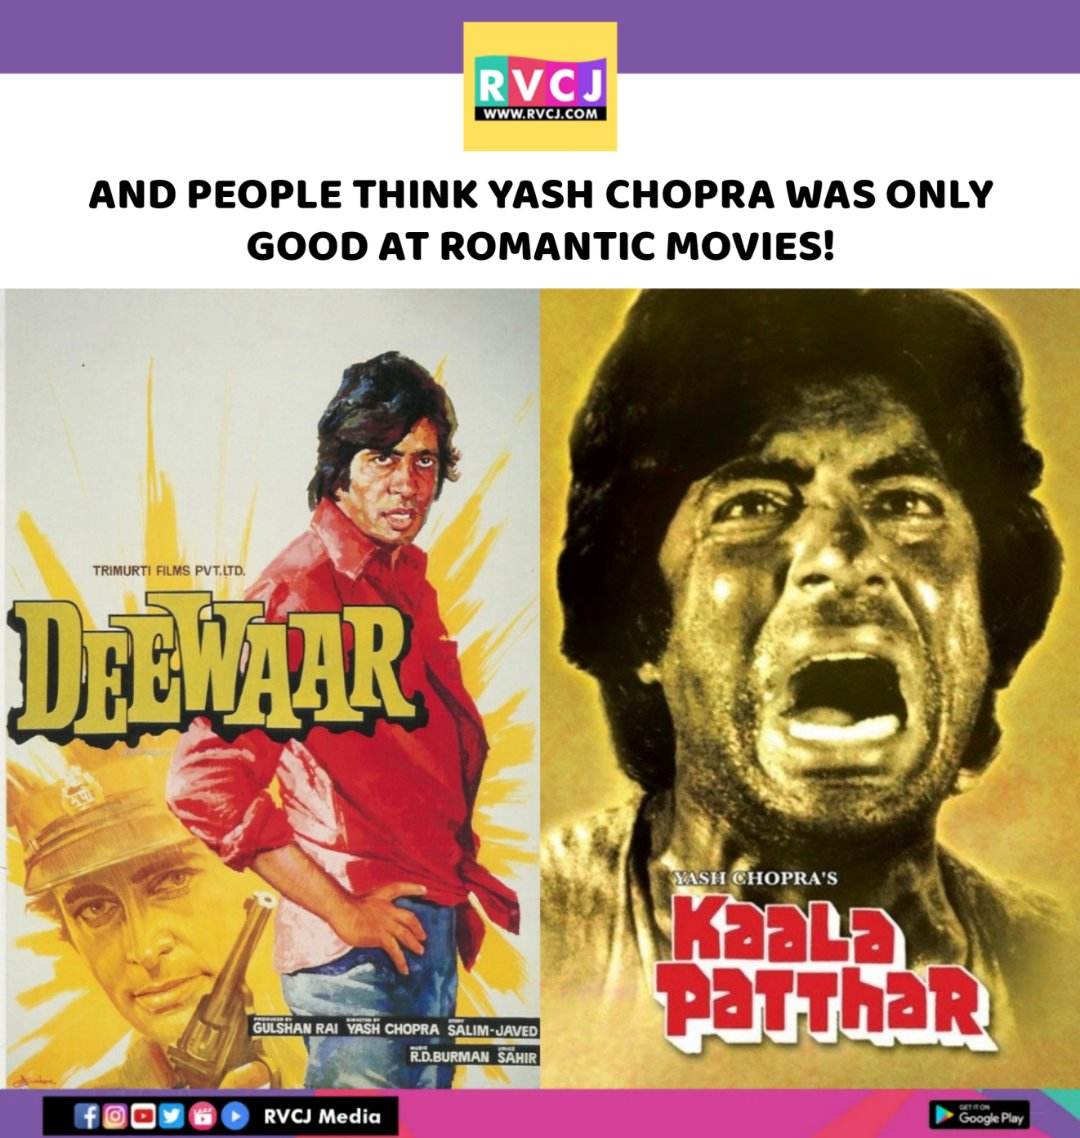 These movies..

#yashchopra #deewaar #kaalapatthar #rvcjinsta #rvcjmovies